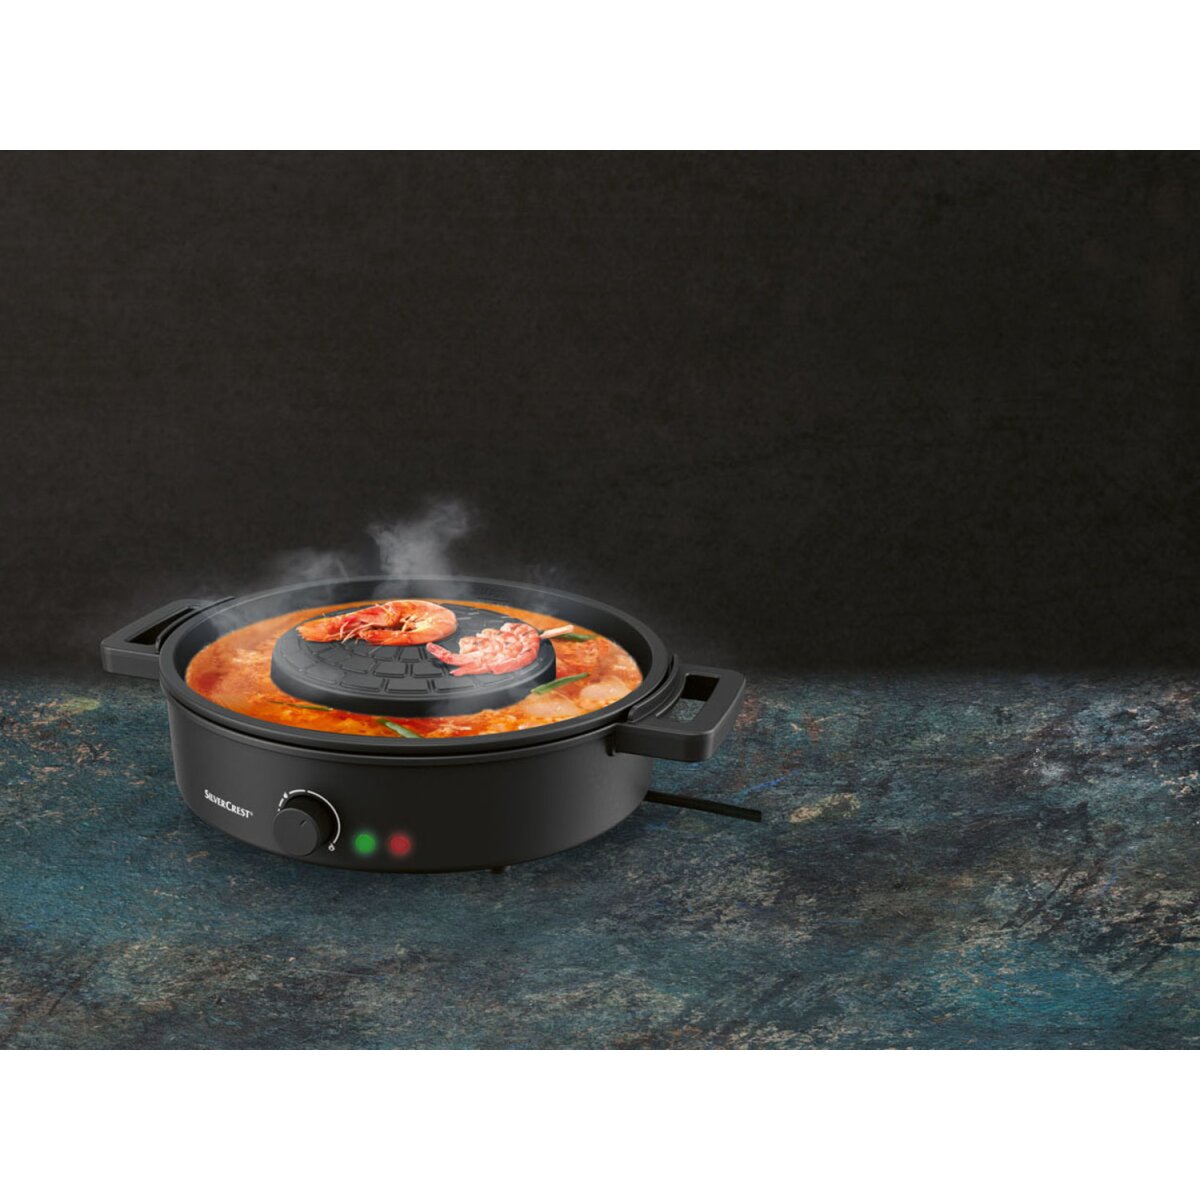 SILVERCREST® KITCHEN TOOLS Tischgrill mit Hot Pot STHP 1800 A1, 2-in-1 - B- Ware sehr gut, 15,99 €